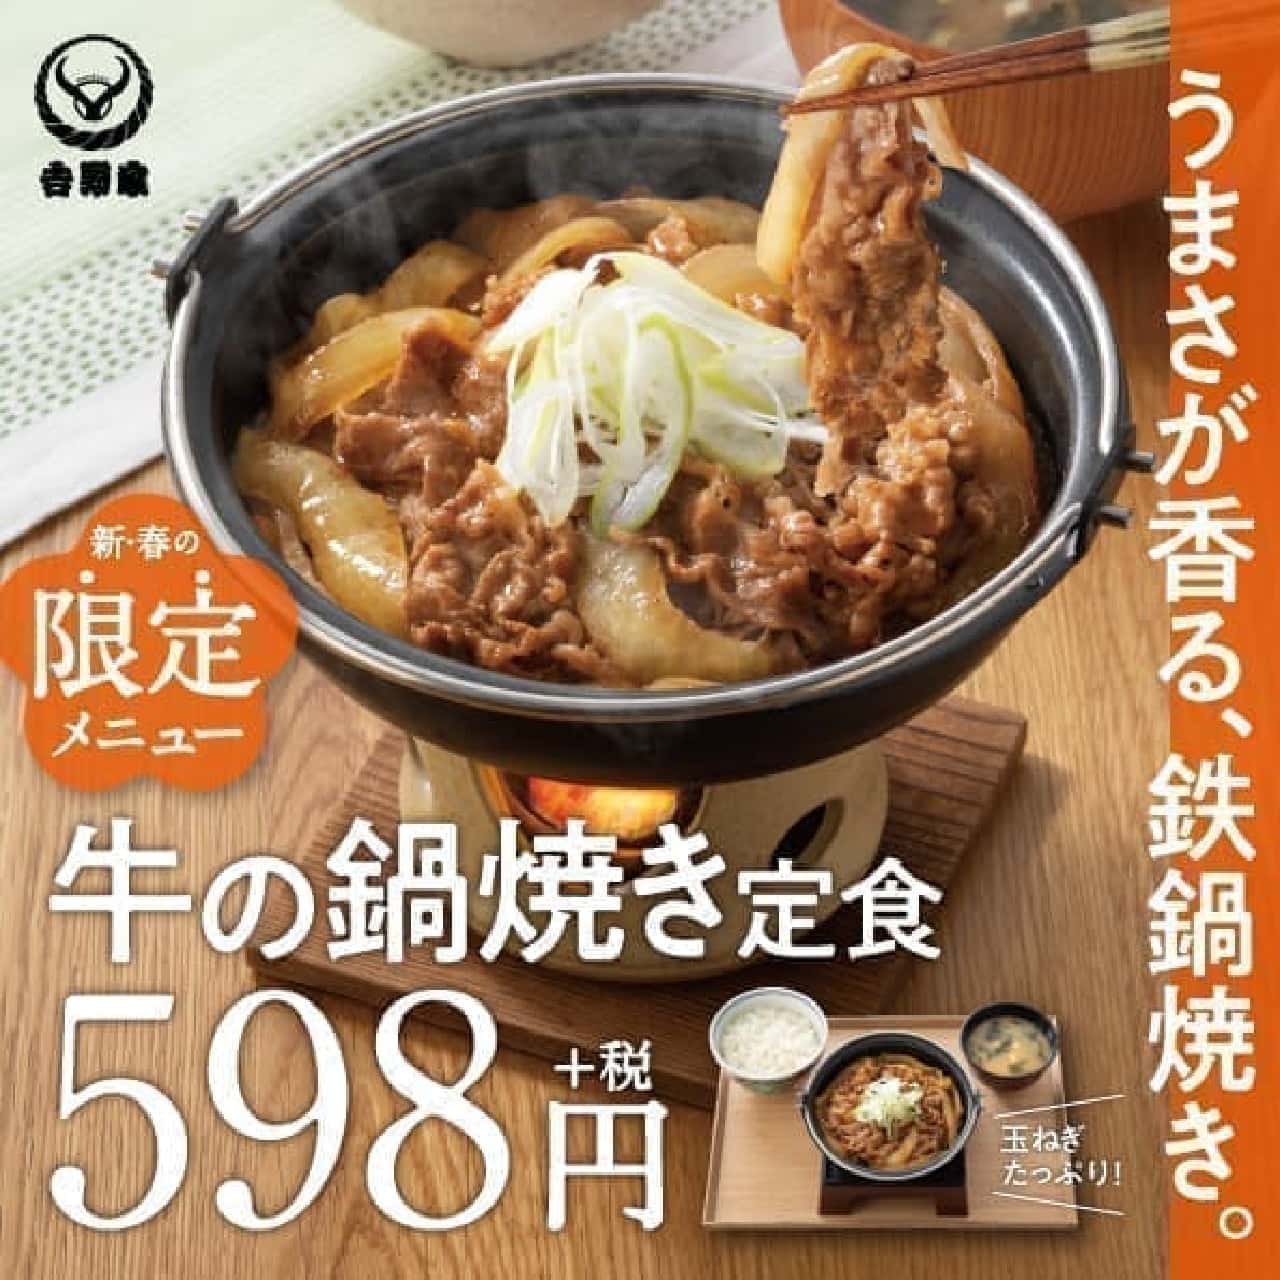 Yoshinoya's "first ever" new menu "beef pot grilled"